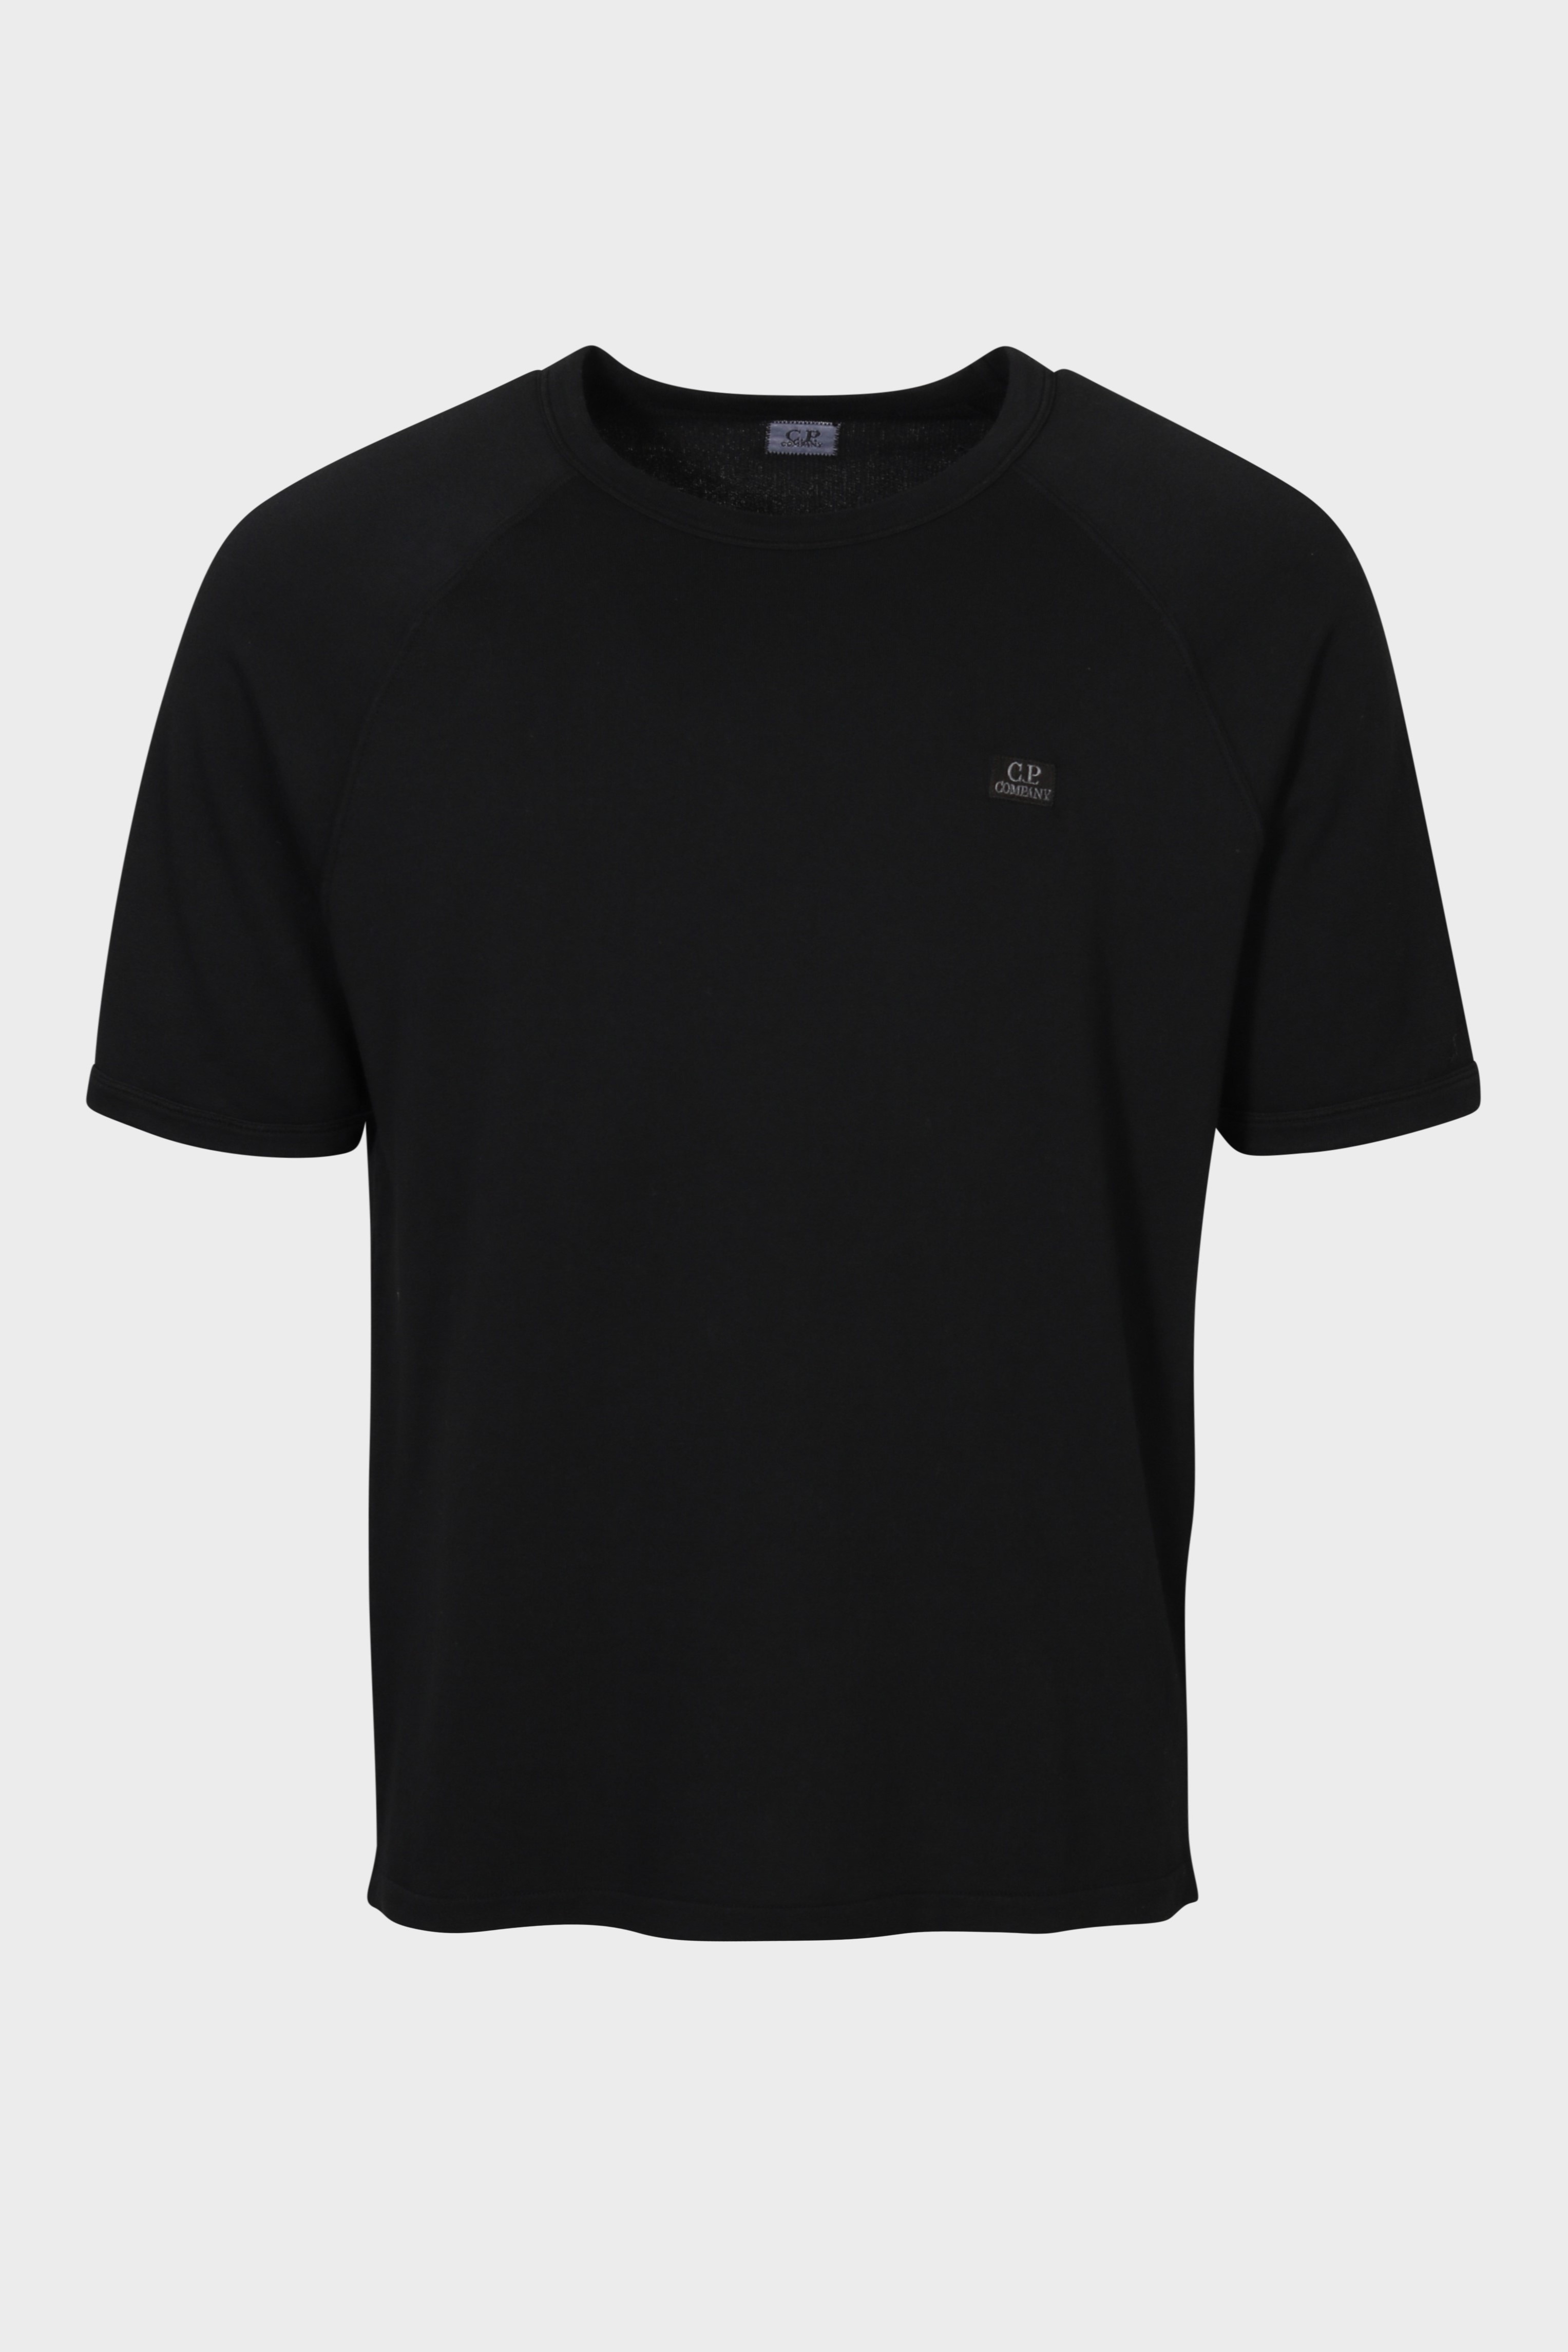 C.P. COMPANY Light Short Sleeve Sweatshirt in Black M